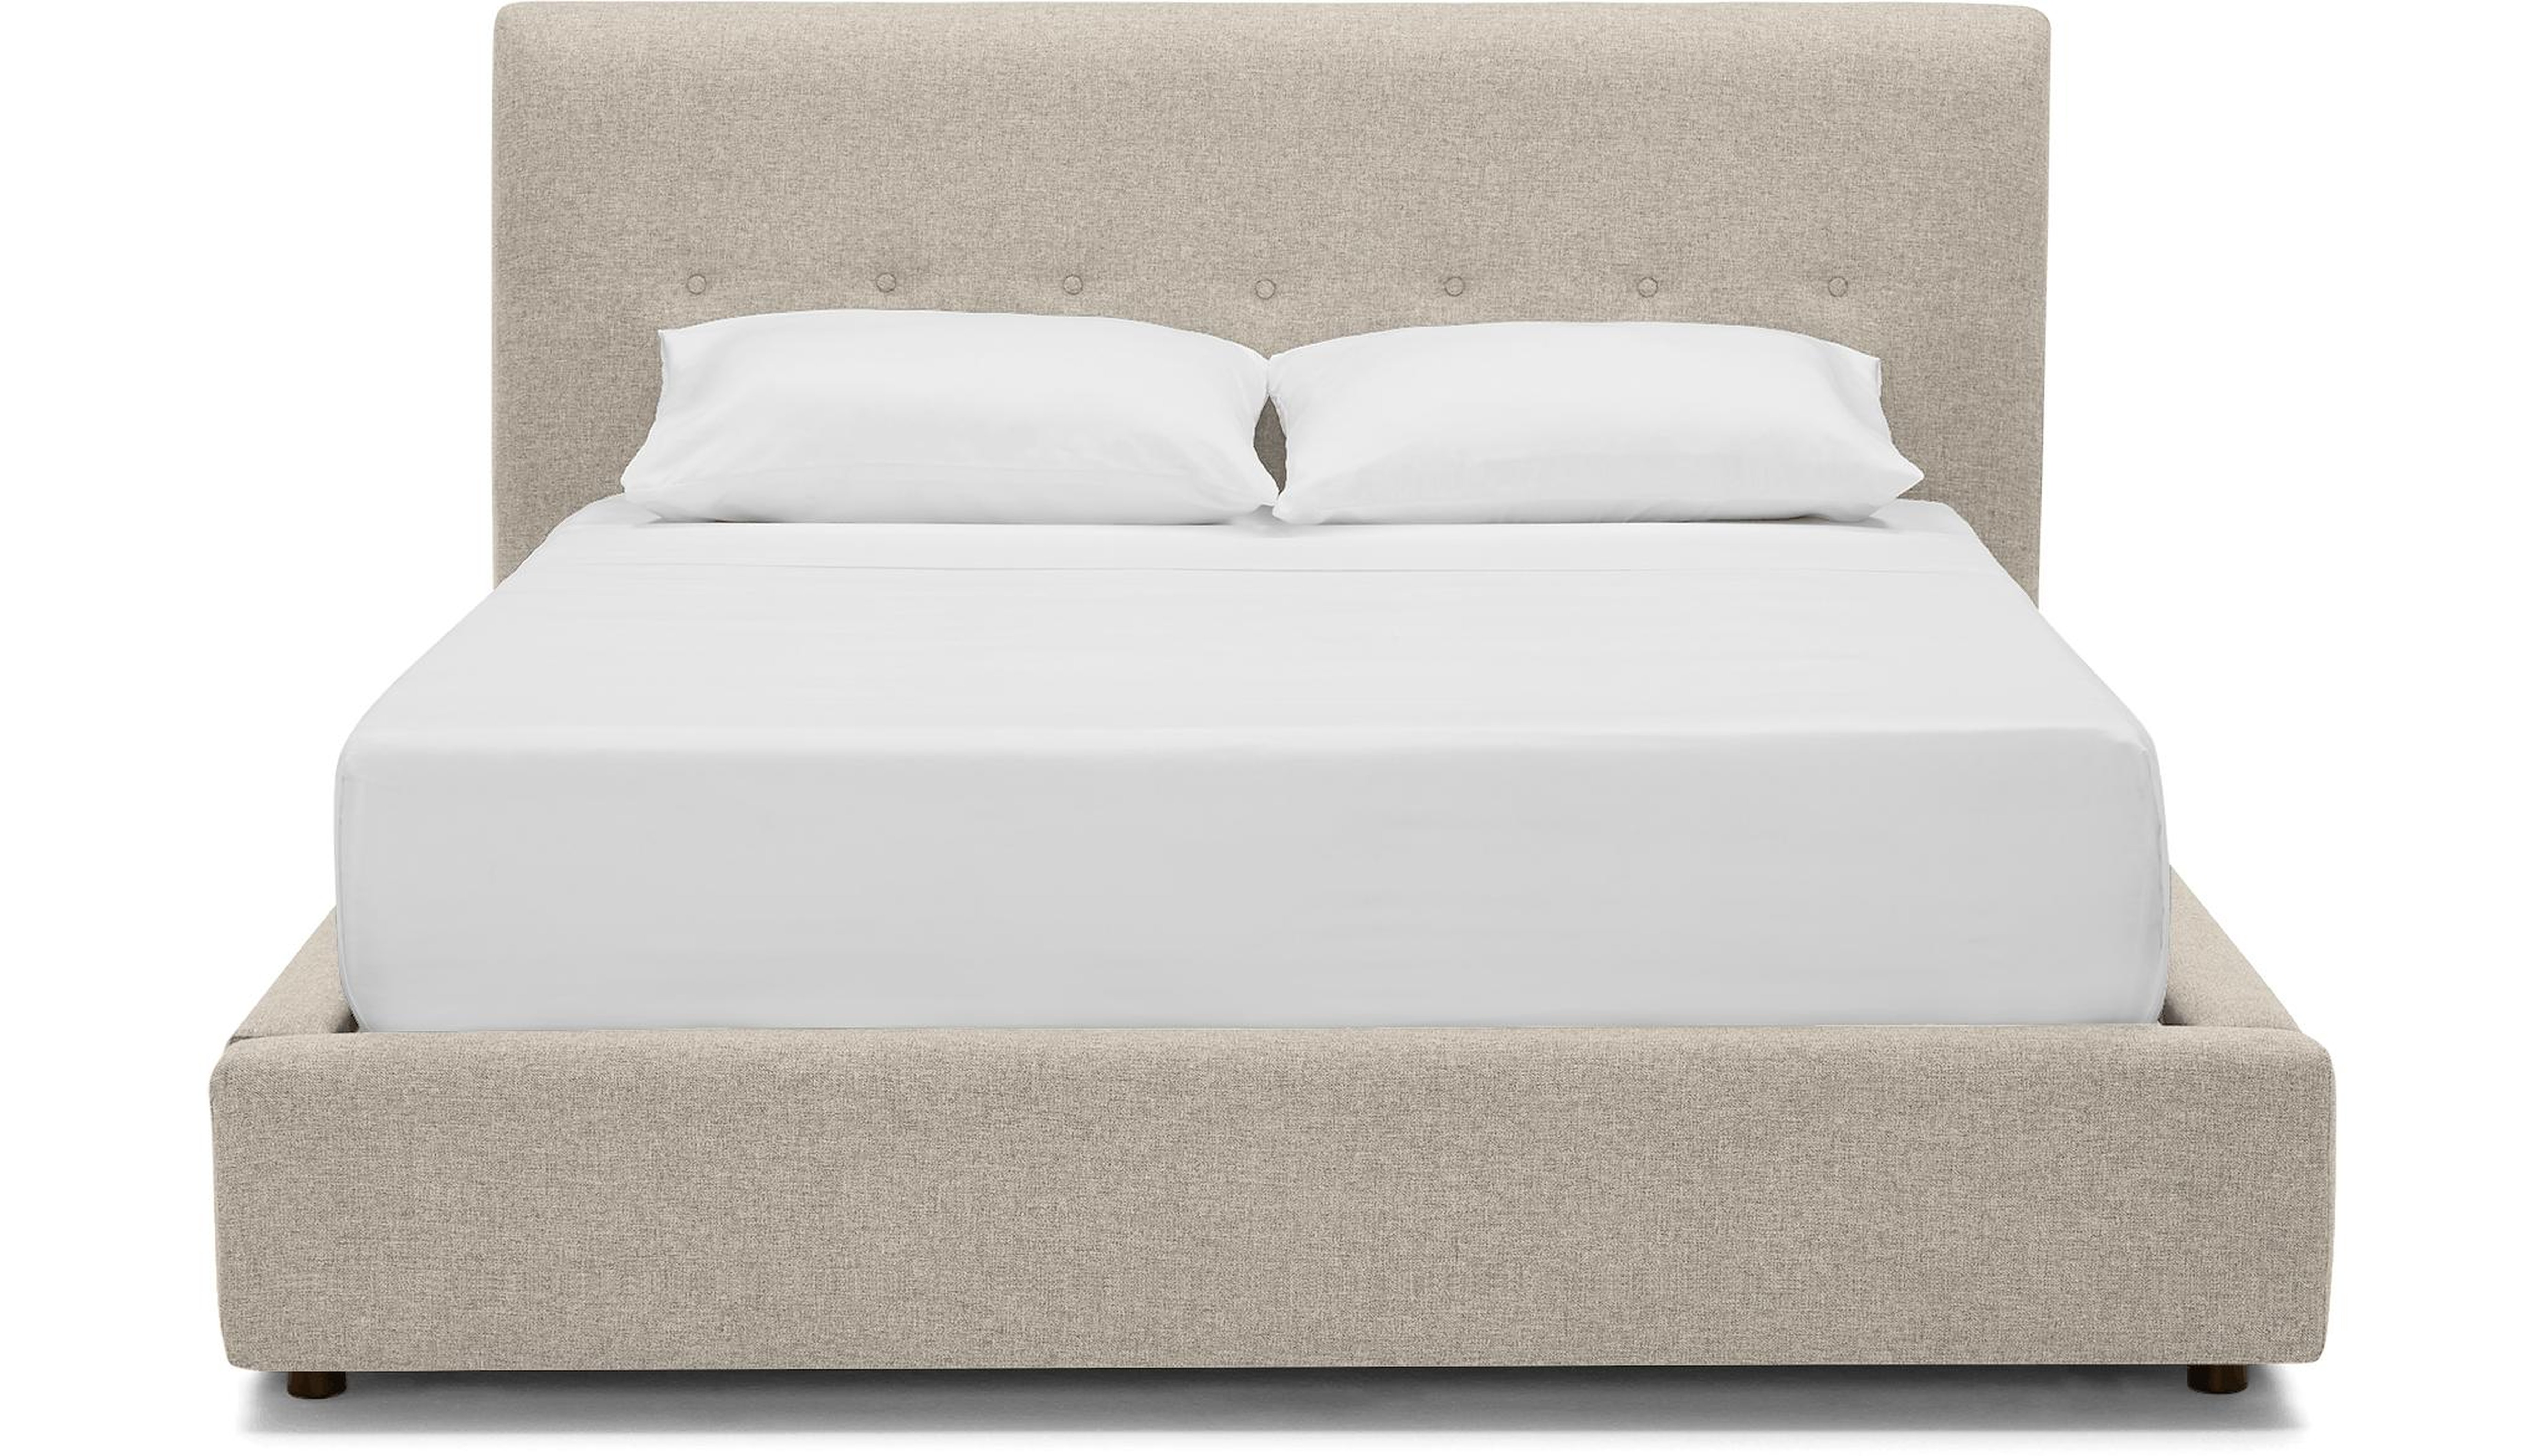 Beige/White Alvin Mid Century Modern Storage Bed - Cody Sandstone - Mocha - Eastern King - Joybird